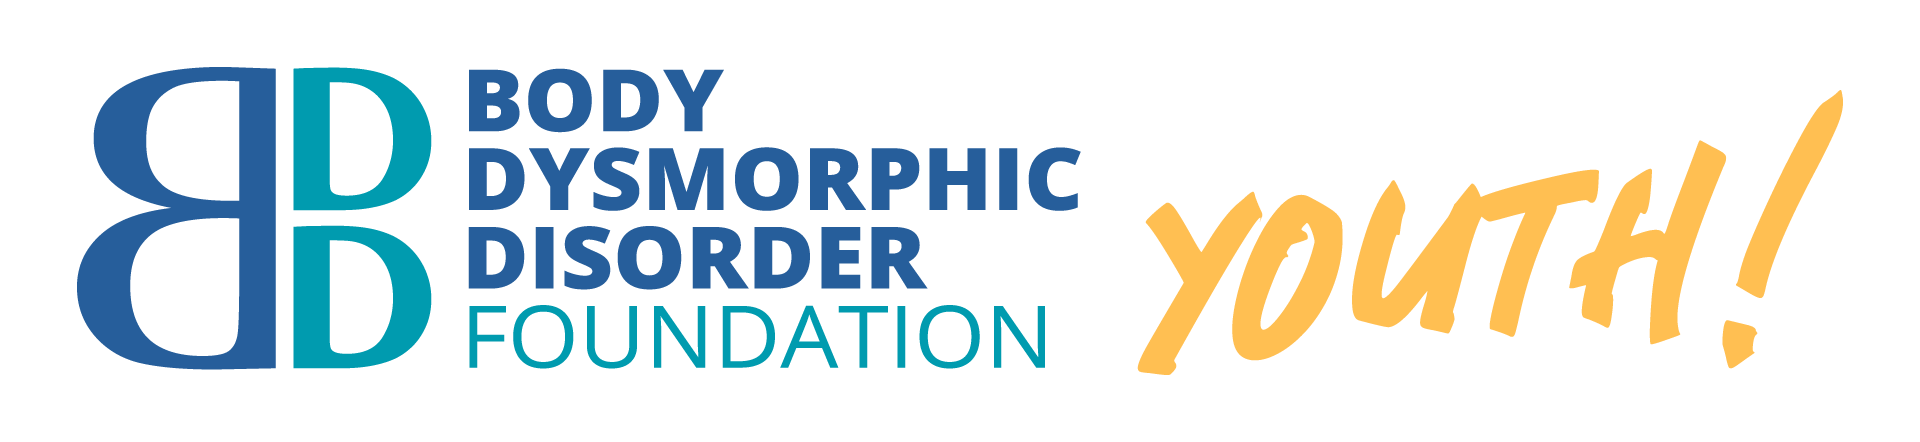 Body Dysmorphic Disorder Foundation YOUTH